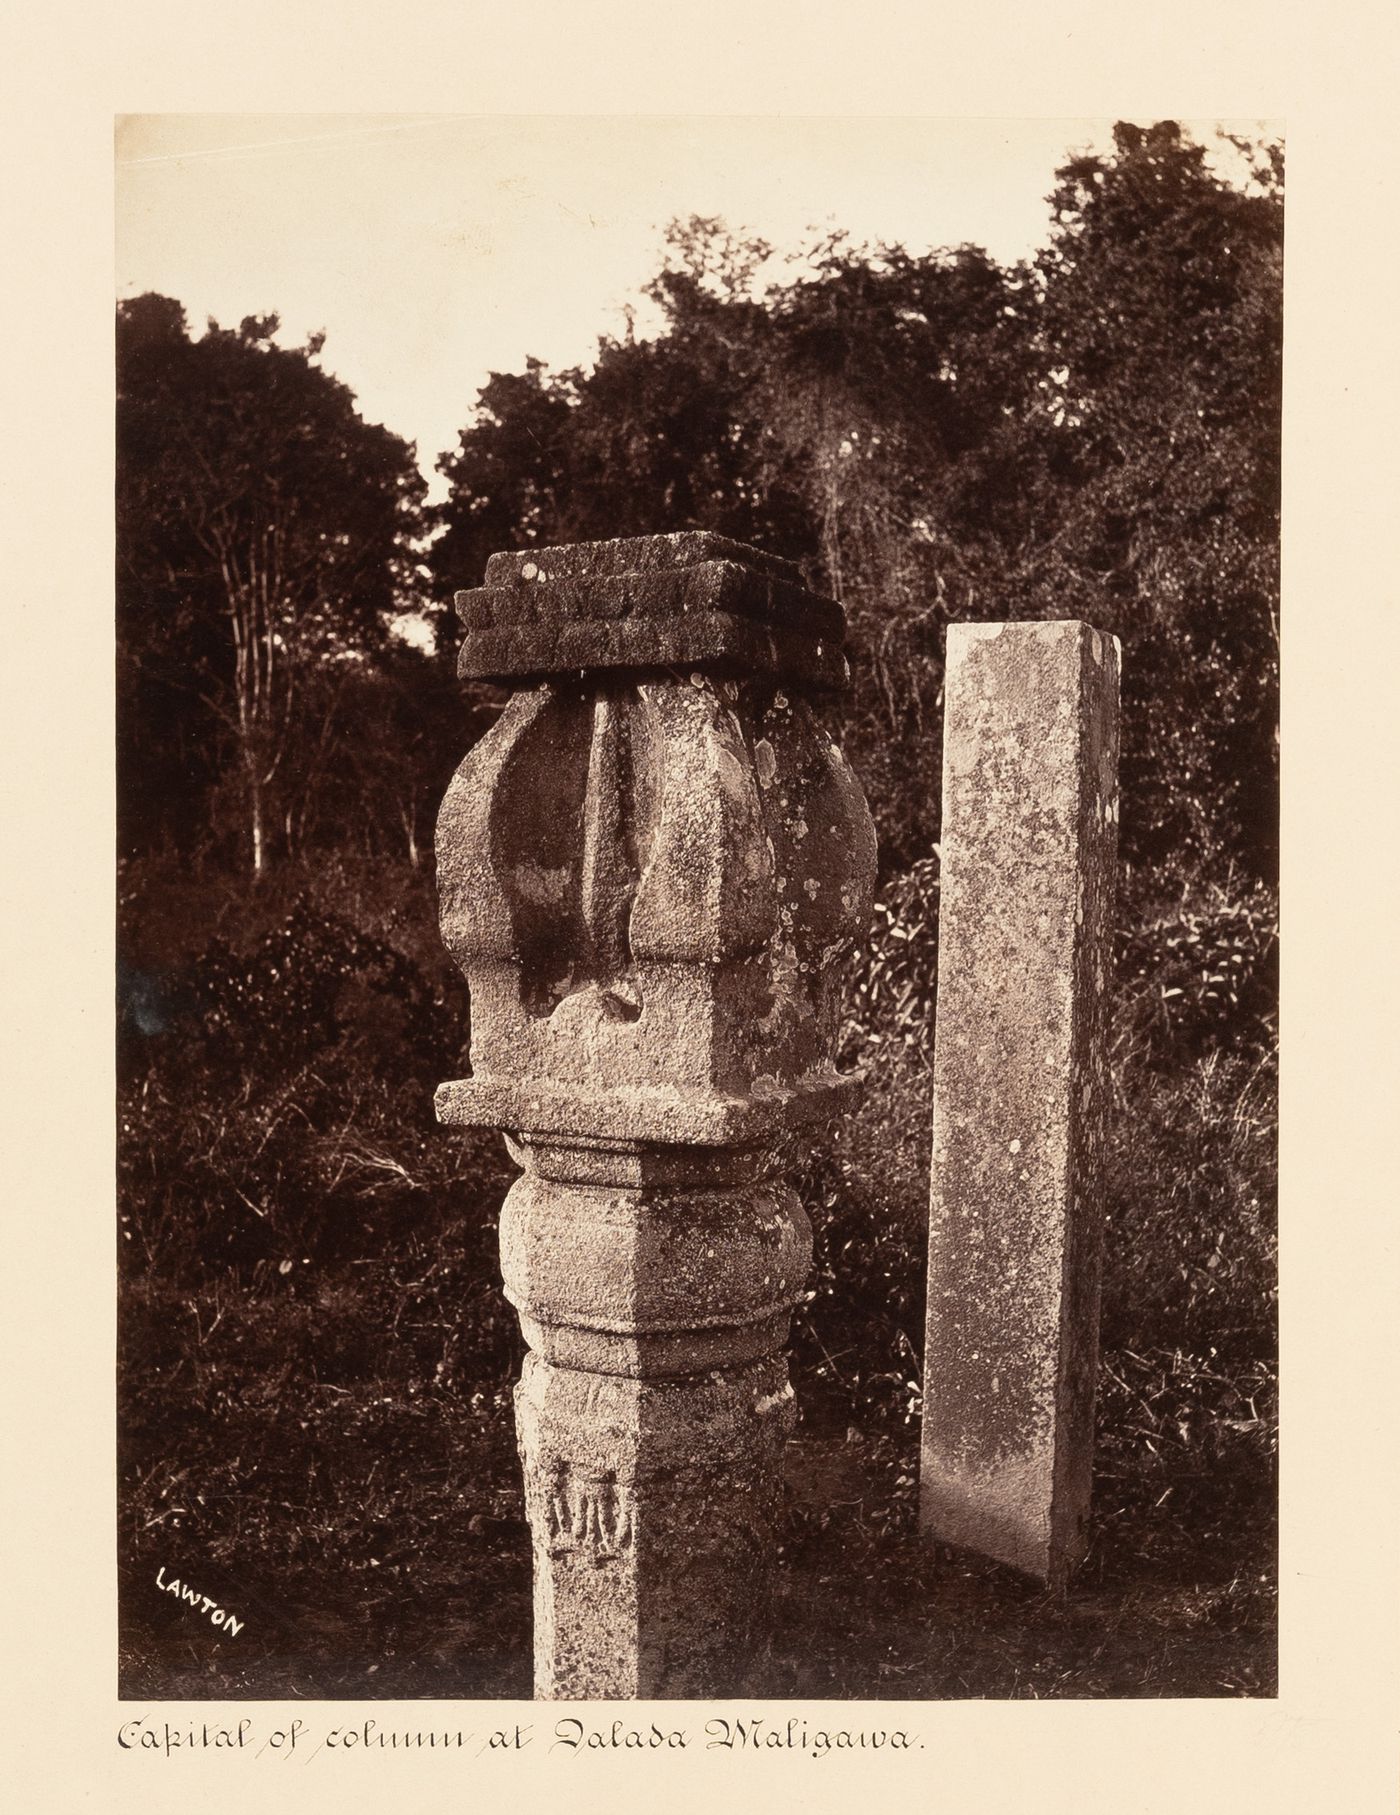 Close-up view of a capital, Temple of the Tooth (also known as the Sri Dalada Maligawa), Anuradhapura, Ceylon (now Sri Lanka)